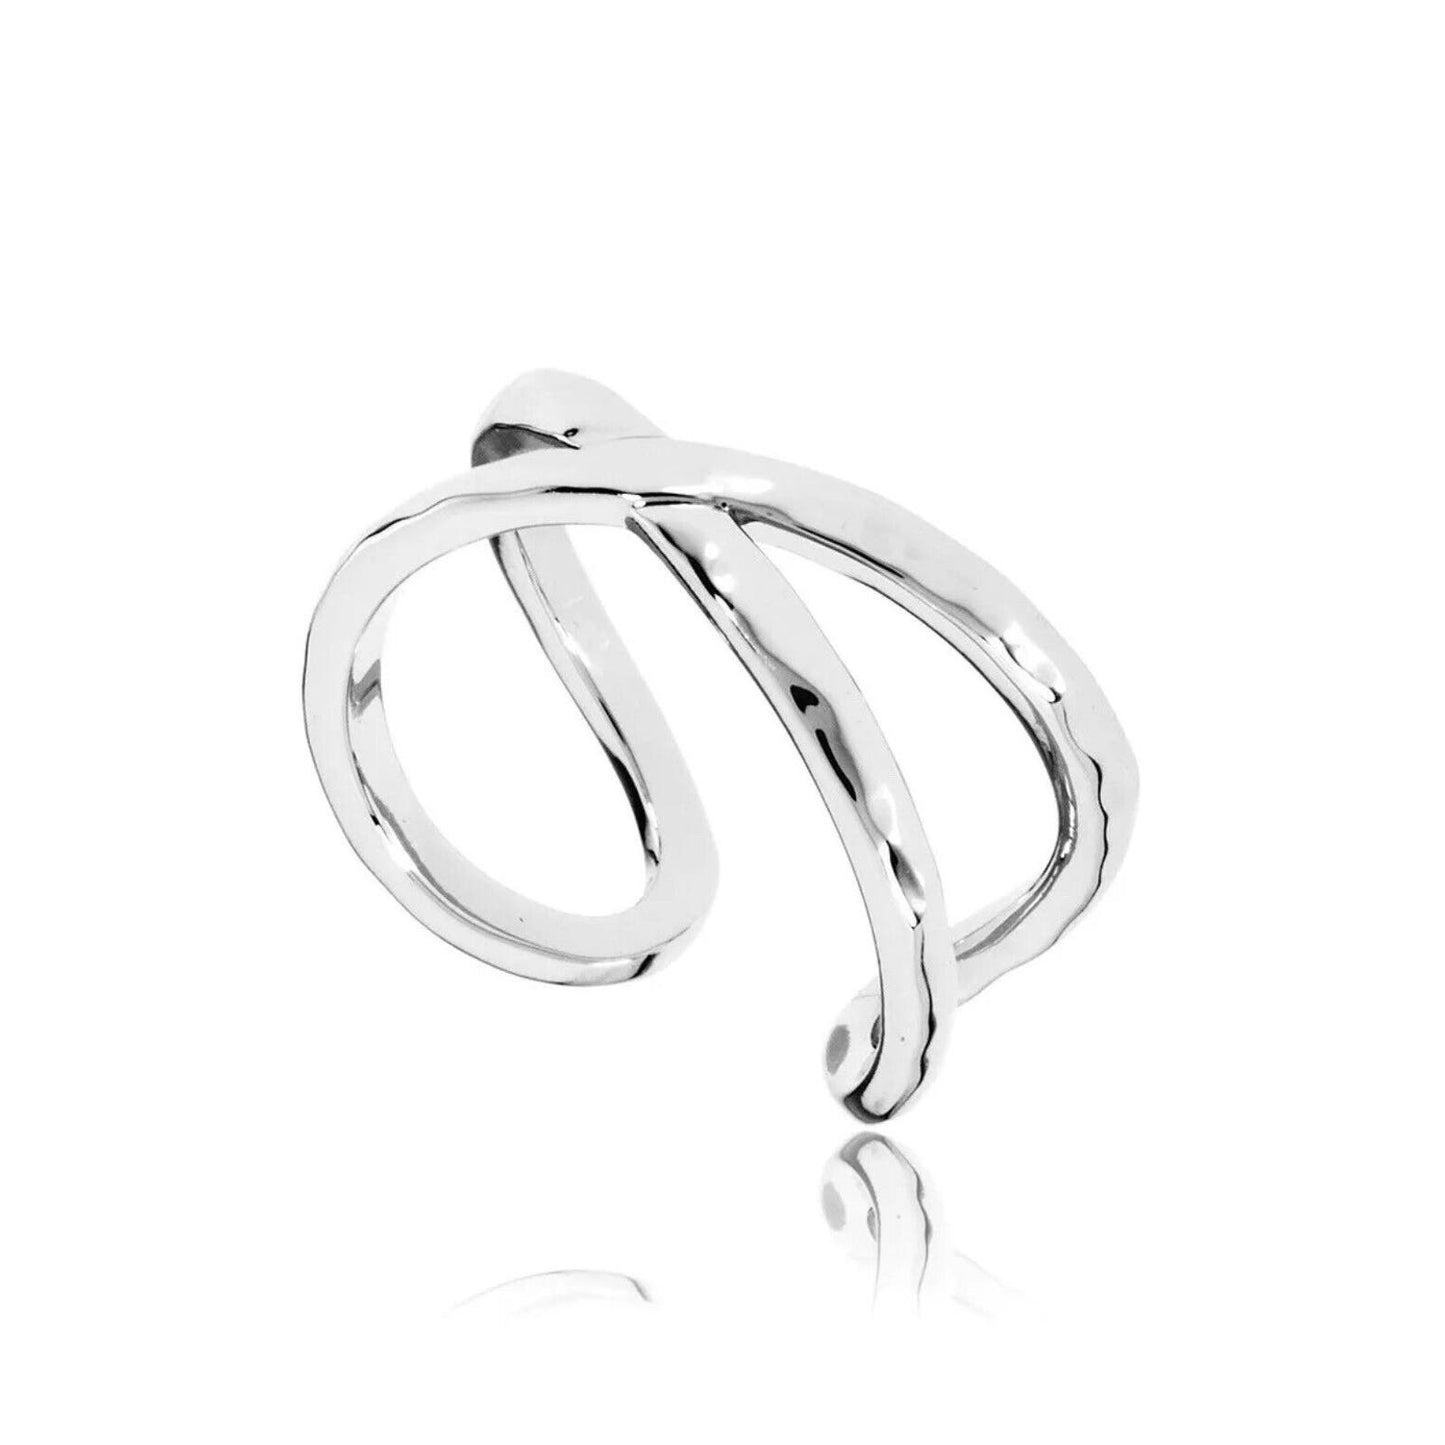 Gorjana Elia Silver Criss Cross Ring Adjustable Size 7